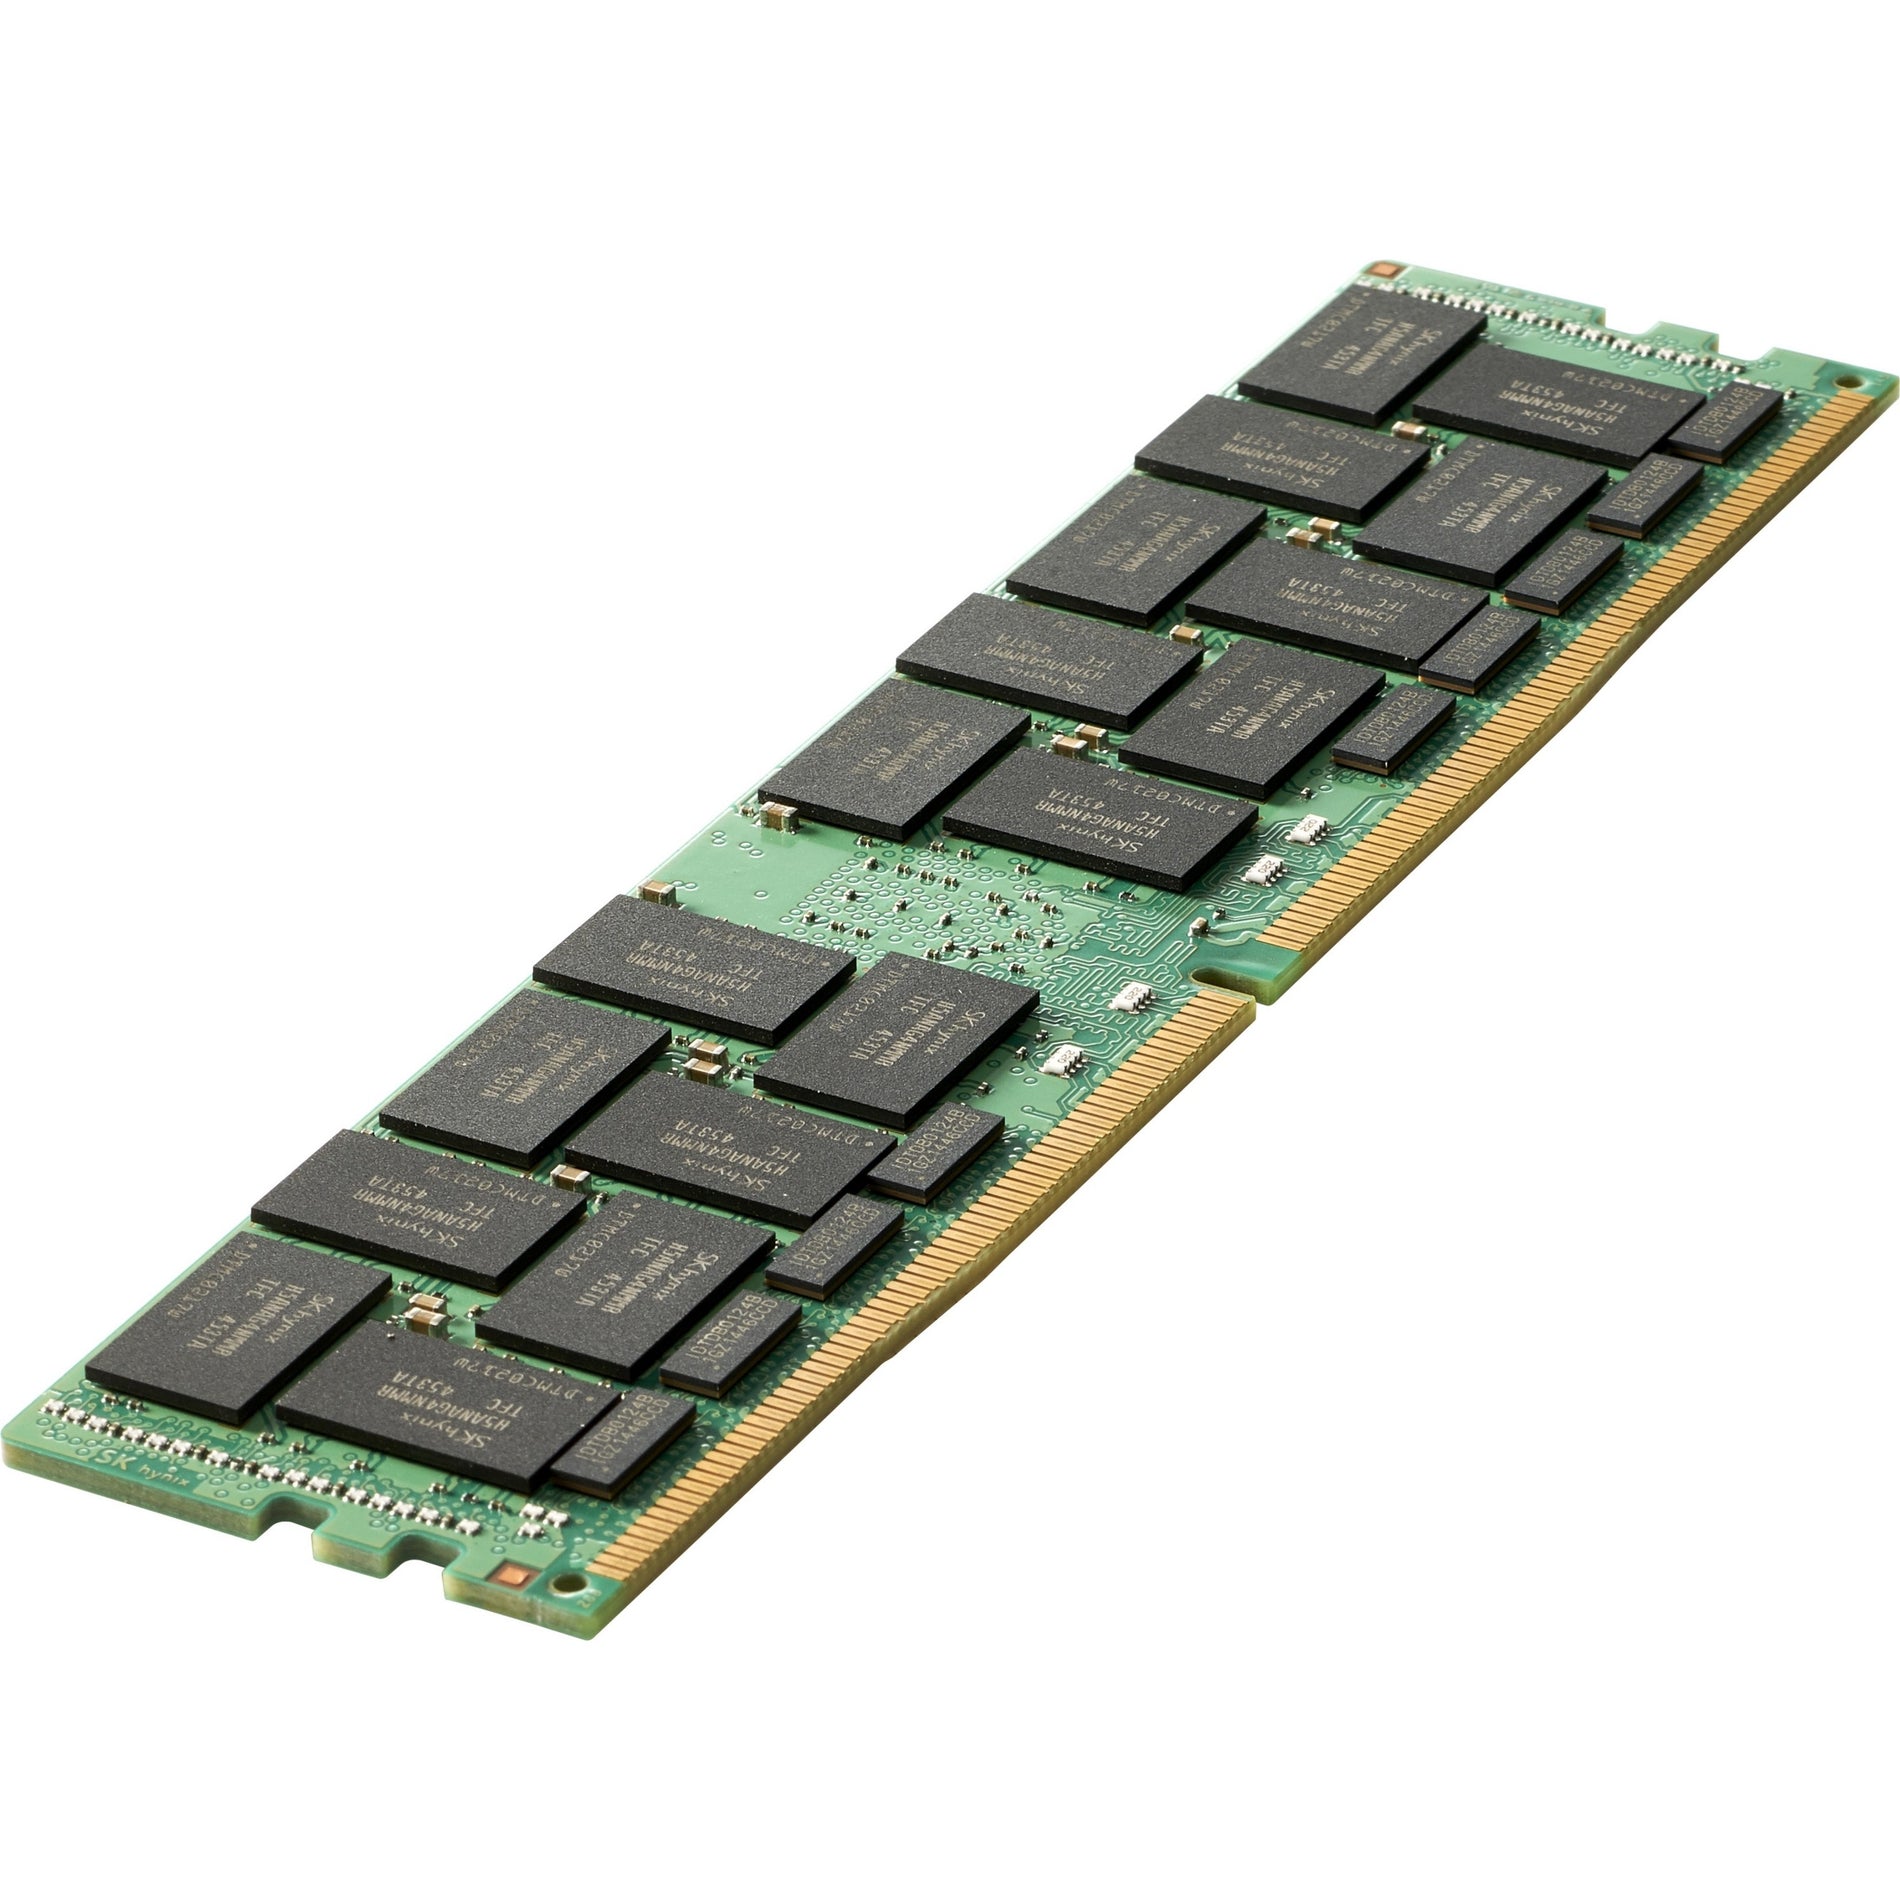 HPE 805358-B21 64GB (1x64GB) Quad Rank x4 DDR4-2400 CAS-17-17-17 Load Registered Memory Kit, High Performance RAM for HPE ProLiant Gen9 Server